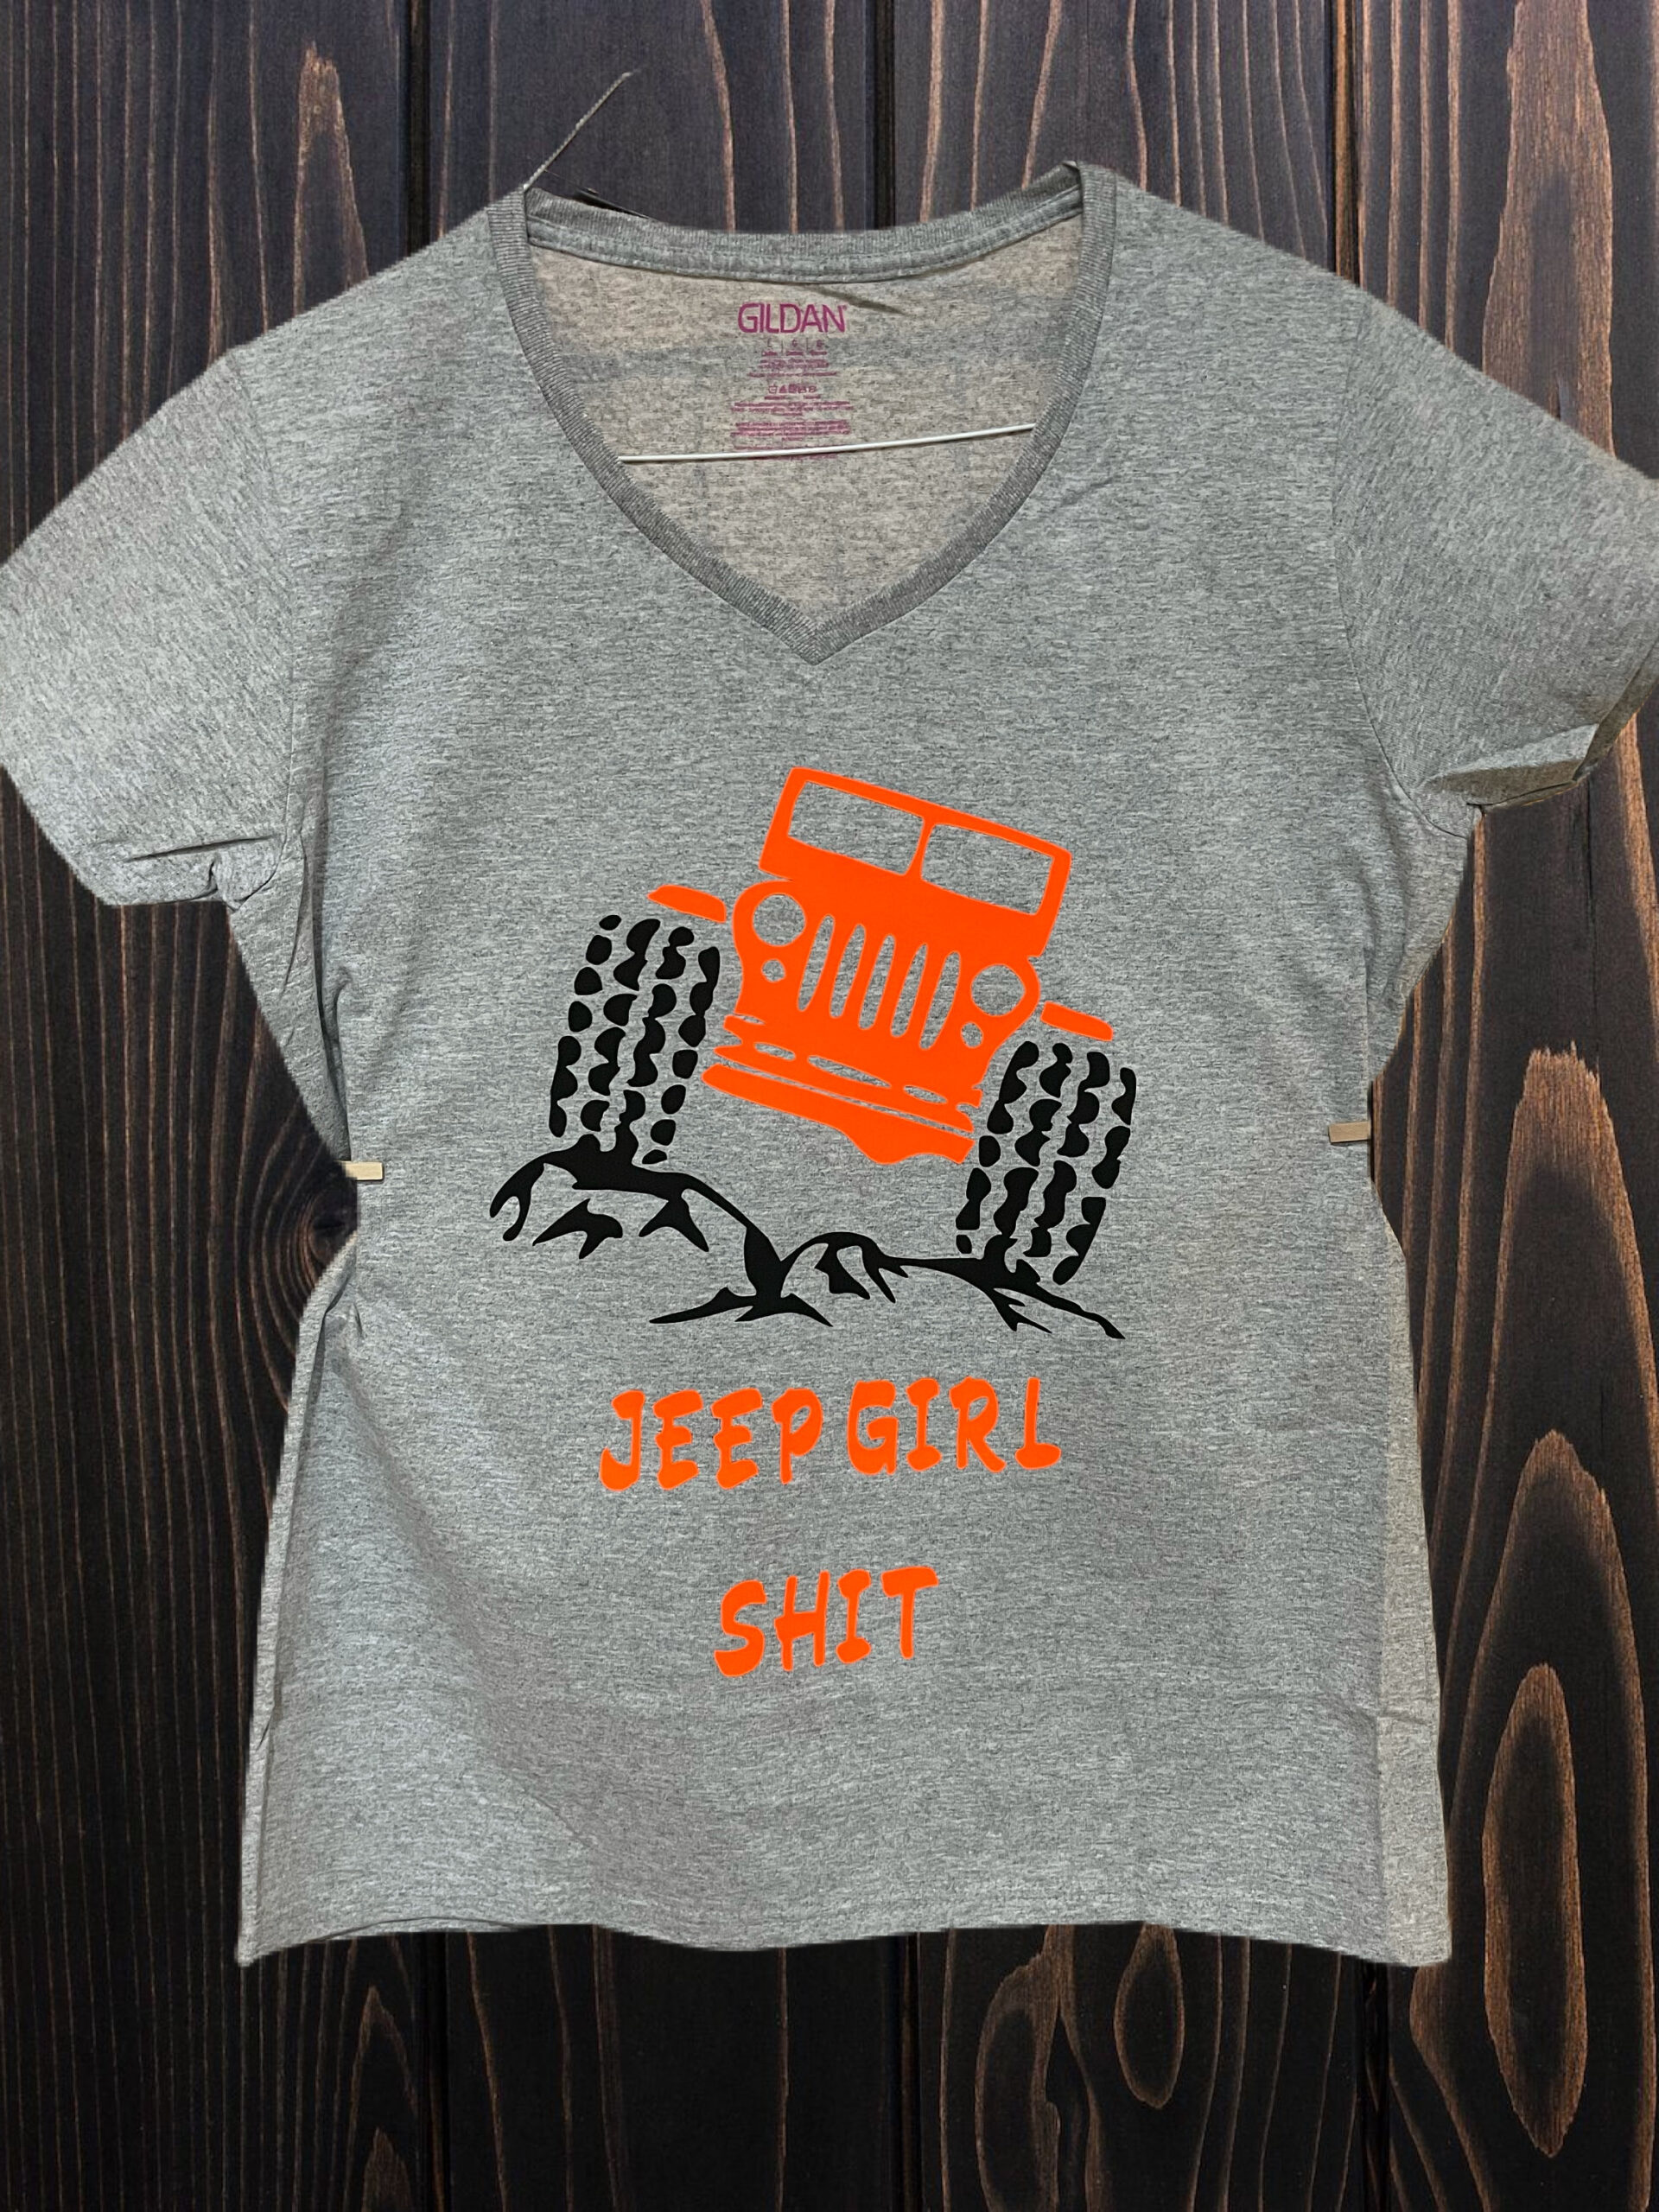 Halloween Jeep Girl Wave Shirt